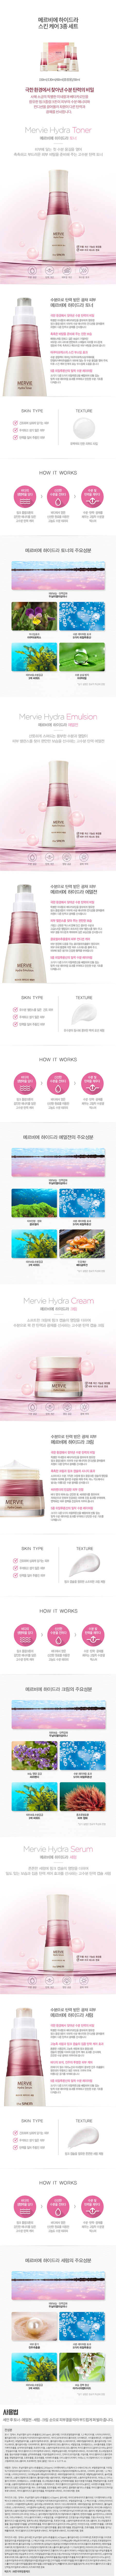 Mervie-Hydra-Skin-Care-3-Set.jpg